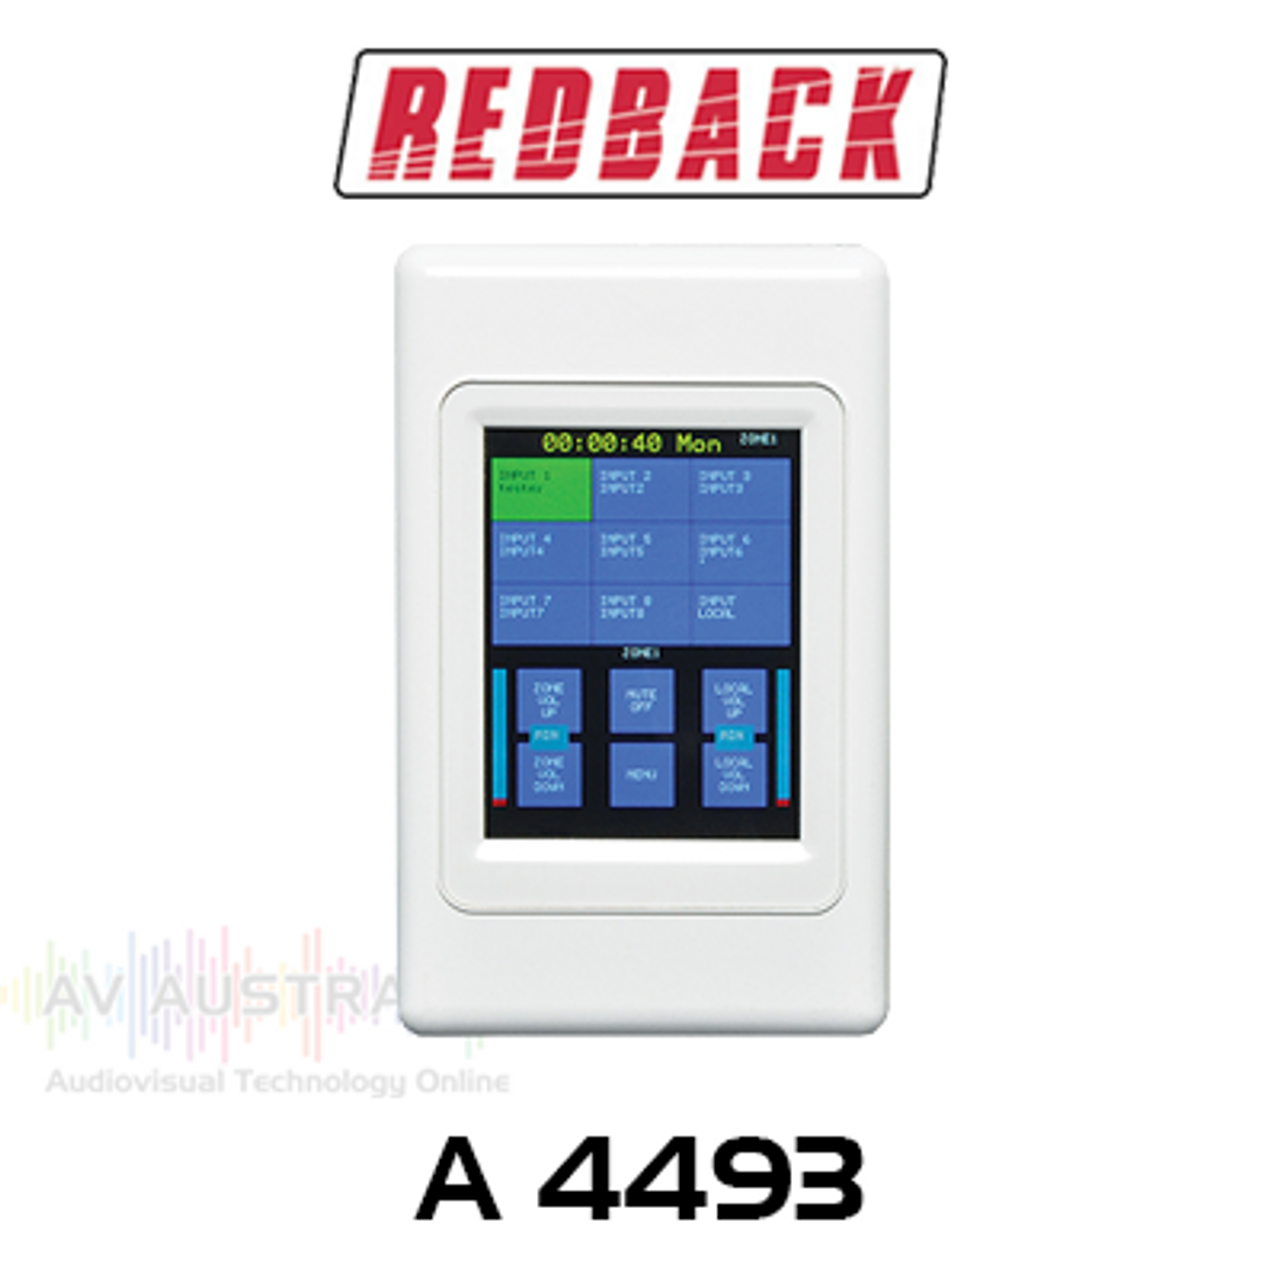 Redback Input Source Selection Touchscreen Wallplate